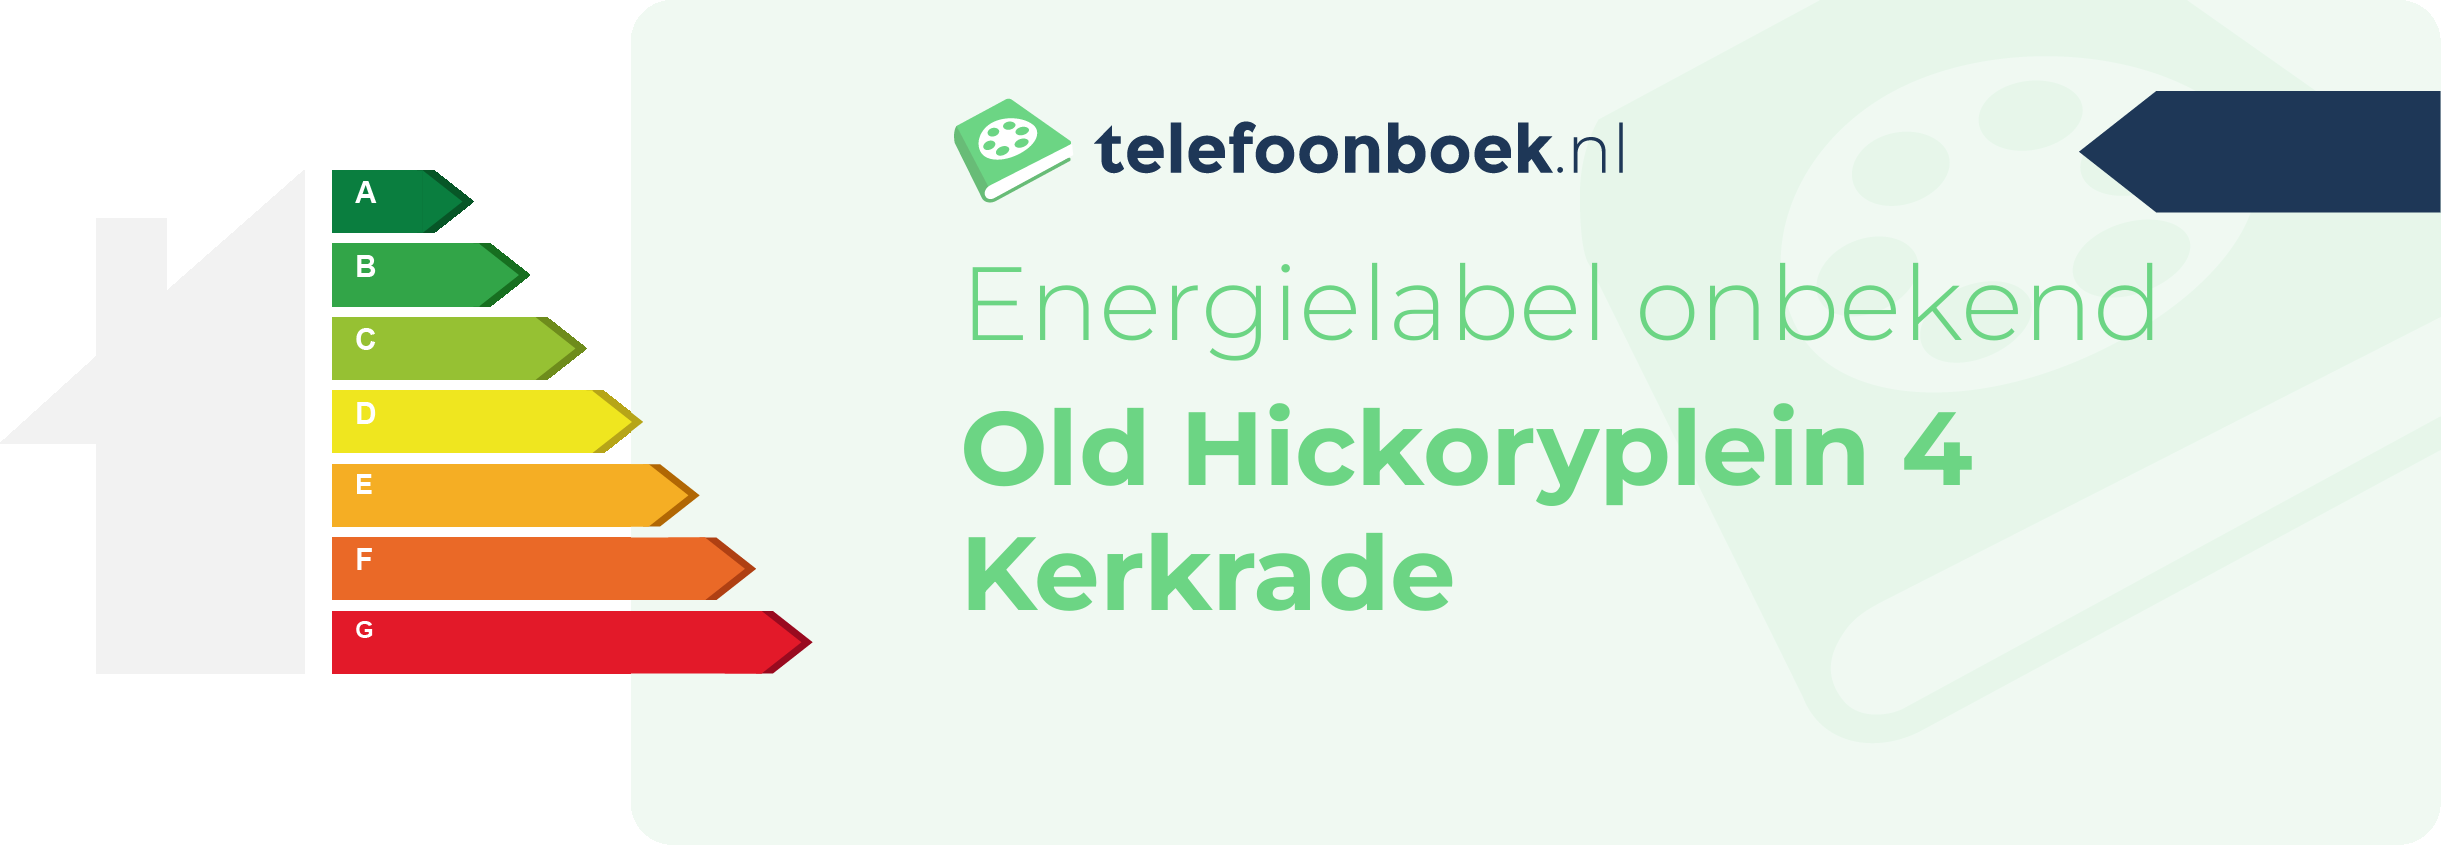 Energielabel Old Hickoryplein 4 Kerkrade